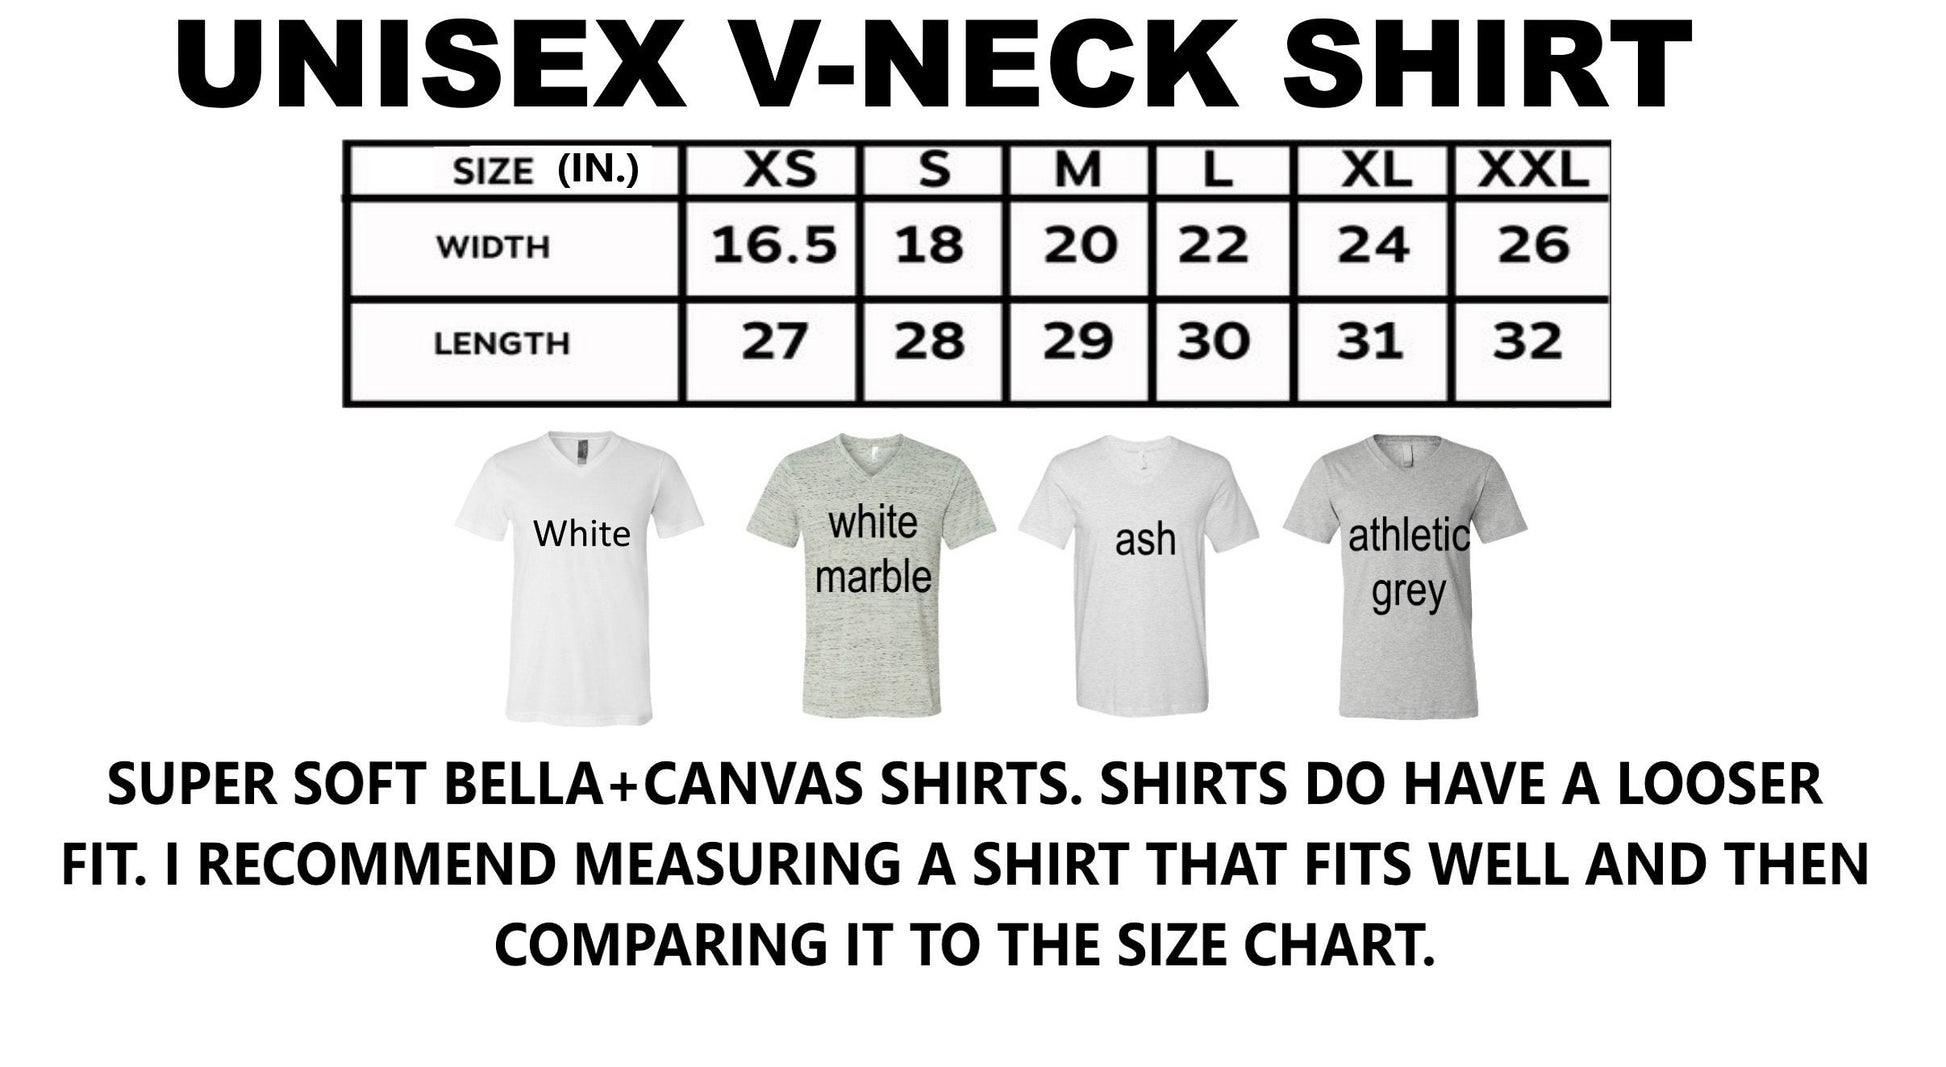 New Grandma Pregnancy Reveal Announcement Bella Unisex V Neck T-Shirt